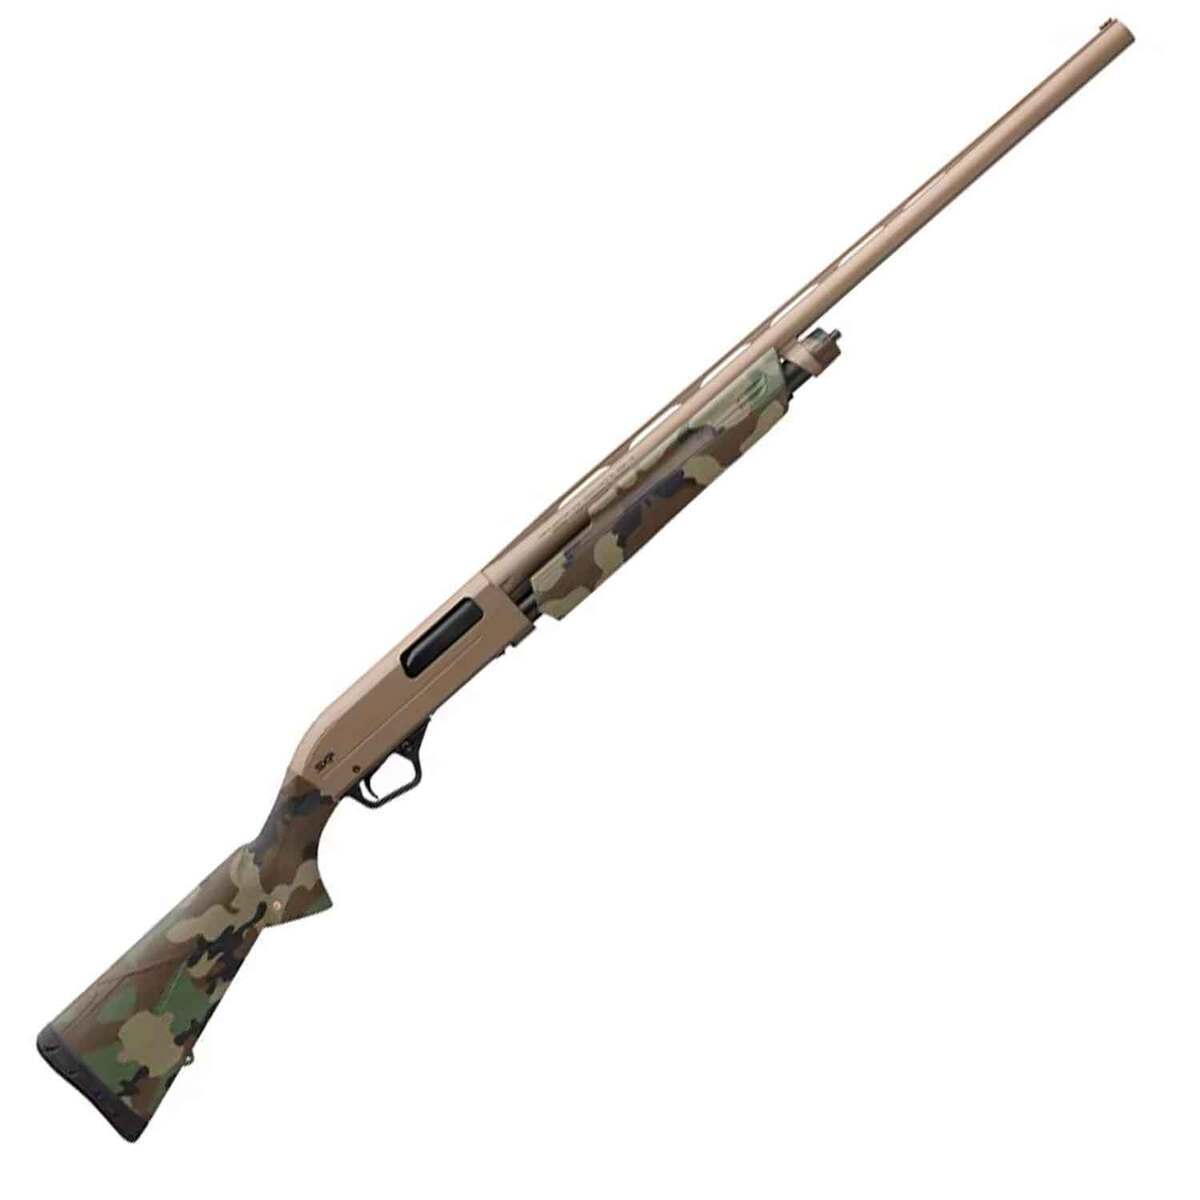 https://www.sportsmans.com/medias/winchester-sxp-hybrid-hunter-flat-dark-earth-woodland-12-gauge-3-12in-pump-action-shotgun-28in-1739159-1.jpg?context=bWFzdGVyfGltYWdlc3wyOTA1M3xpbWFnZS9qcGVnfGFEa3pMMmcyTWk4eE1EVXpNREUxTXpZeU56WTNPQzh4TnpNNU1UVTVMVEZmWW1GelpTMWpiMjUyWlhKemFXOXVSbTl5YldGMFh6RXlNREF0WTI5dWRtVnljMmx2YmtadmNtMWhkQXxiNGY0YjFhMzIxZDM0ZDViMWFhYzM5ZDNjZmRmNmZlMjkxMGVhOGVmNGUyOTAzYjBhYzM1NmQ0YTVlMDU2Yjli